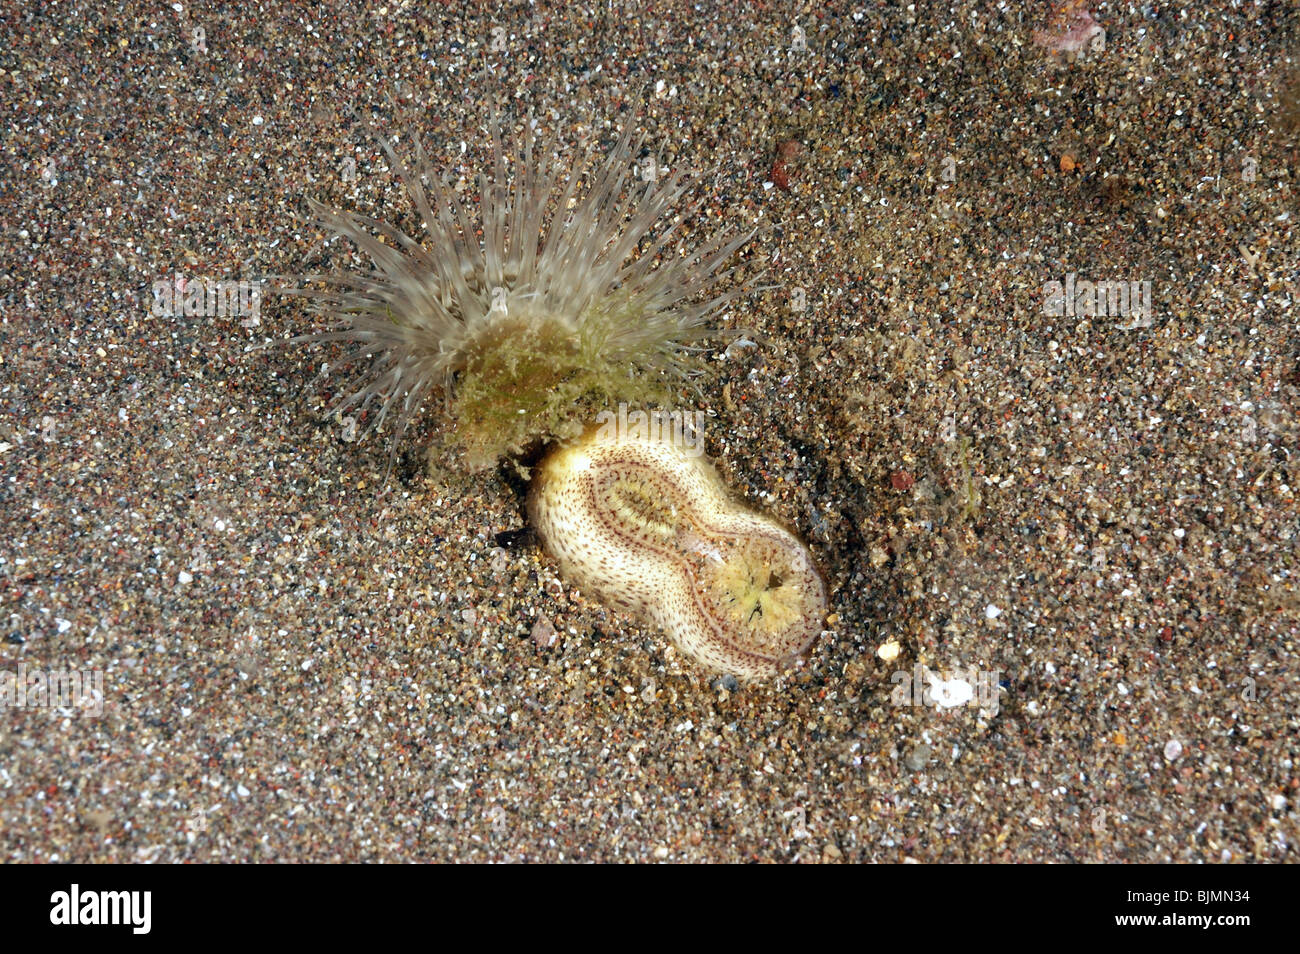 Anemone Sagartiogeten an Razorshell befestigt. sandigen Meeresboden Torbay Devon. Mai. Stockfoto